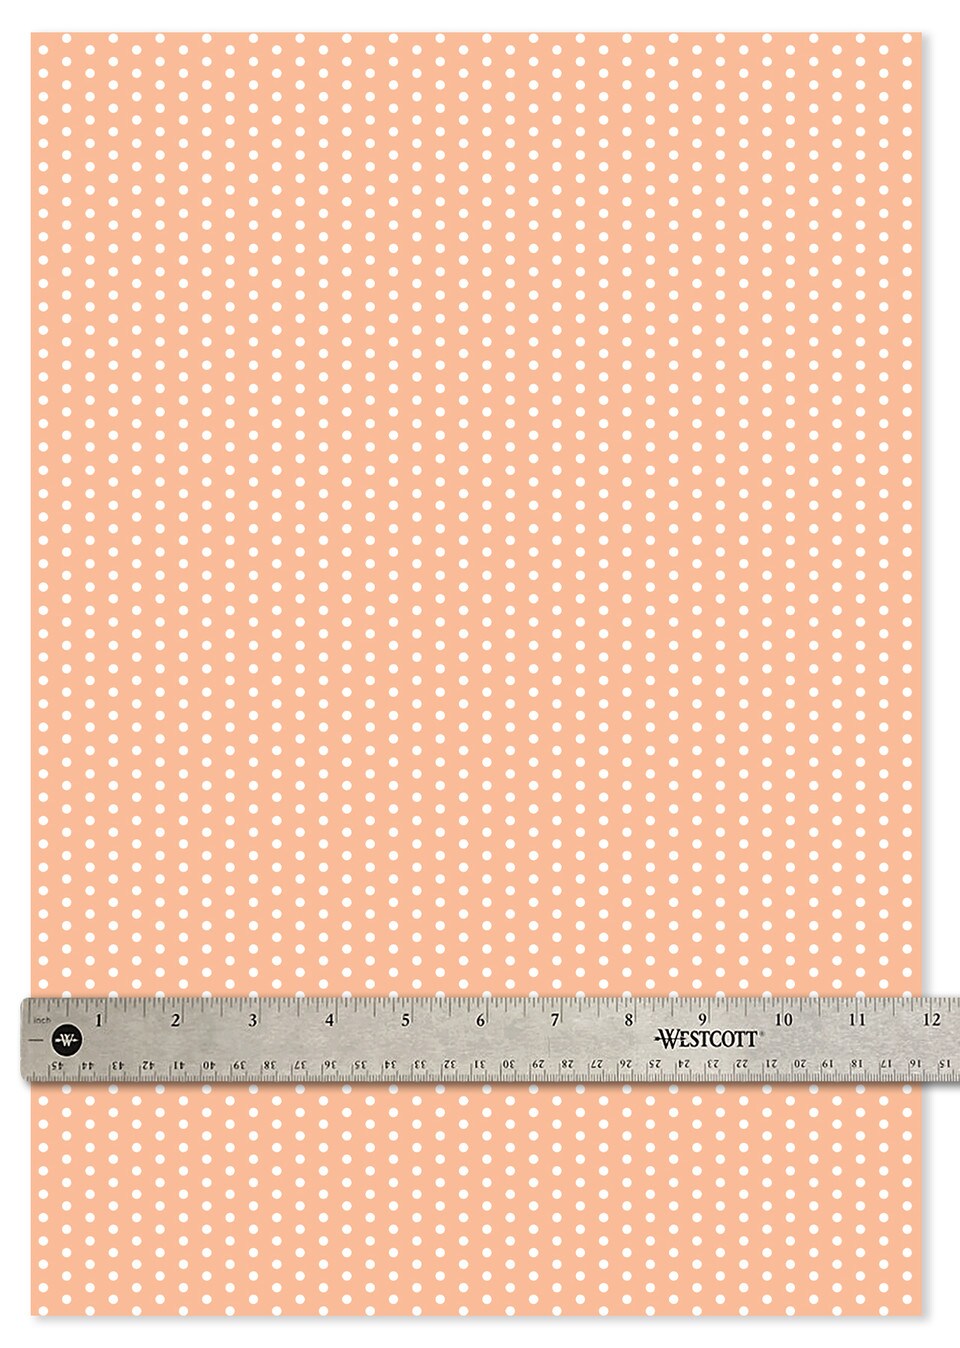 Happy Crafters® Polka Dot 11.8" x 18" Sheet